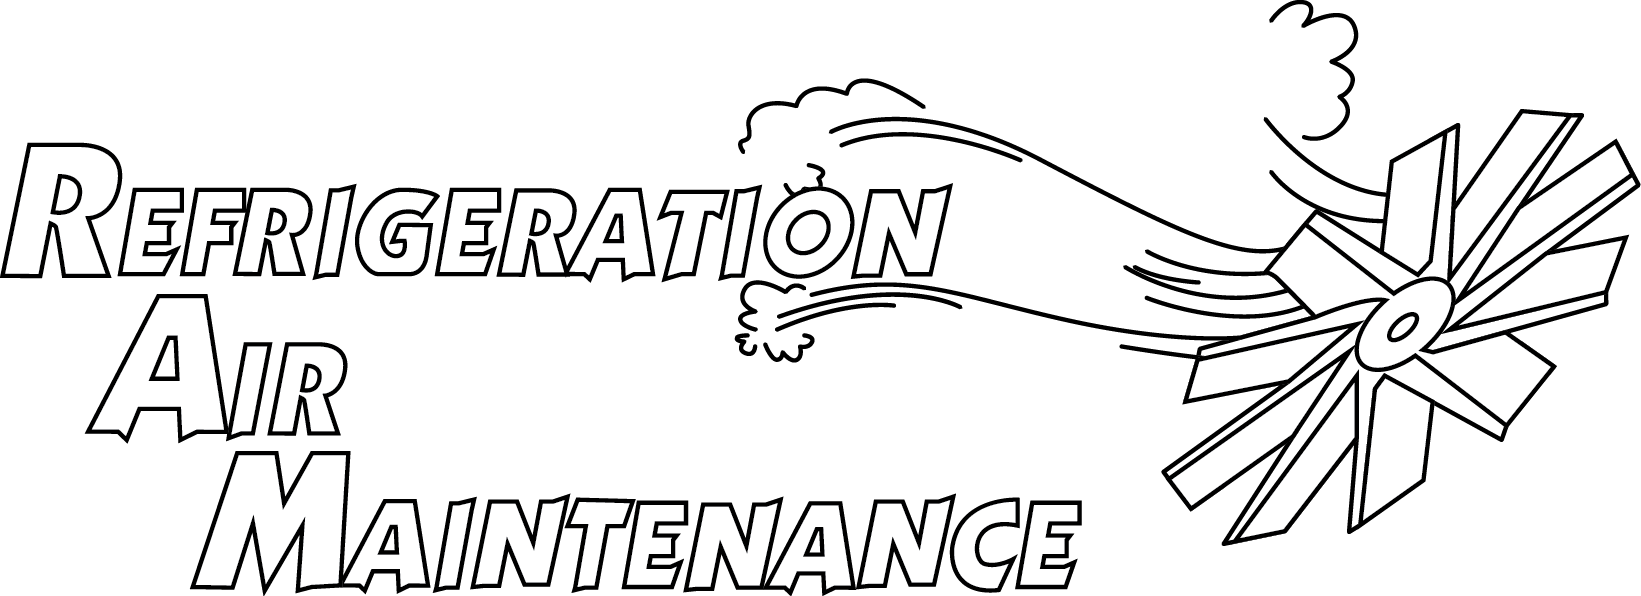 Refrigeration Air Maintenance